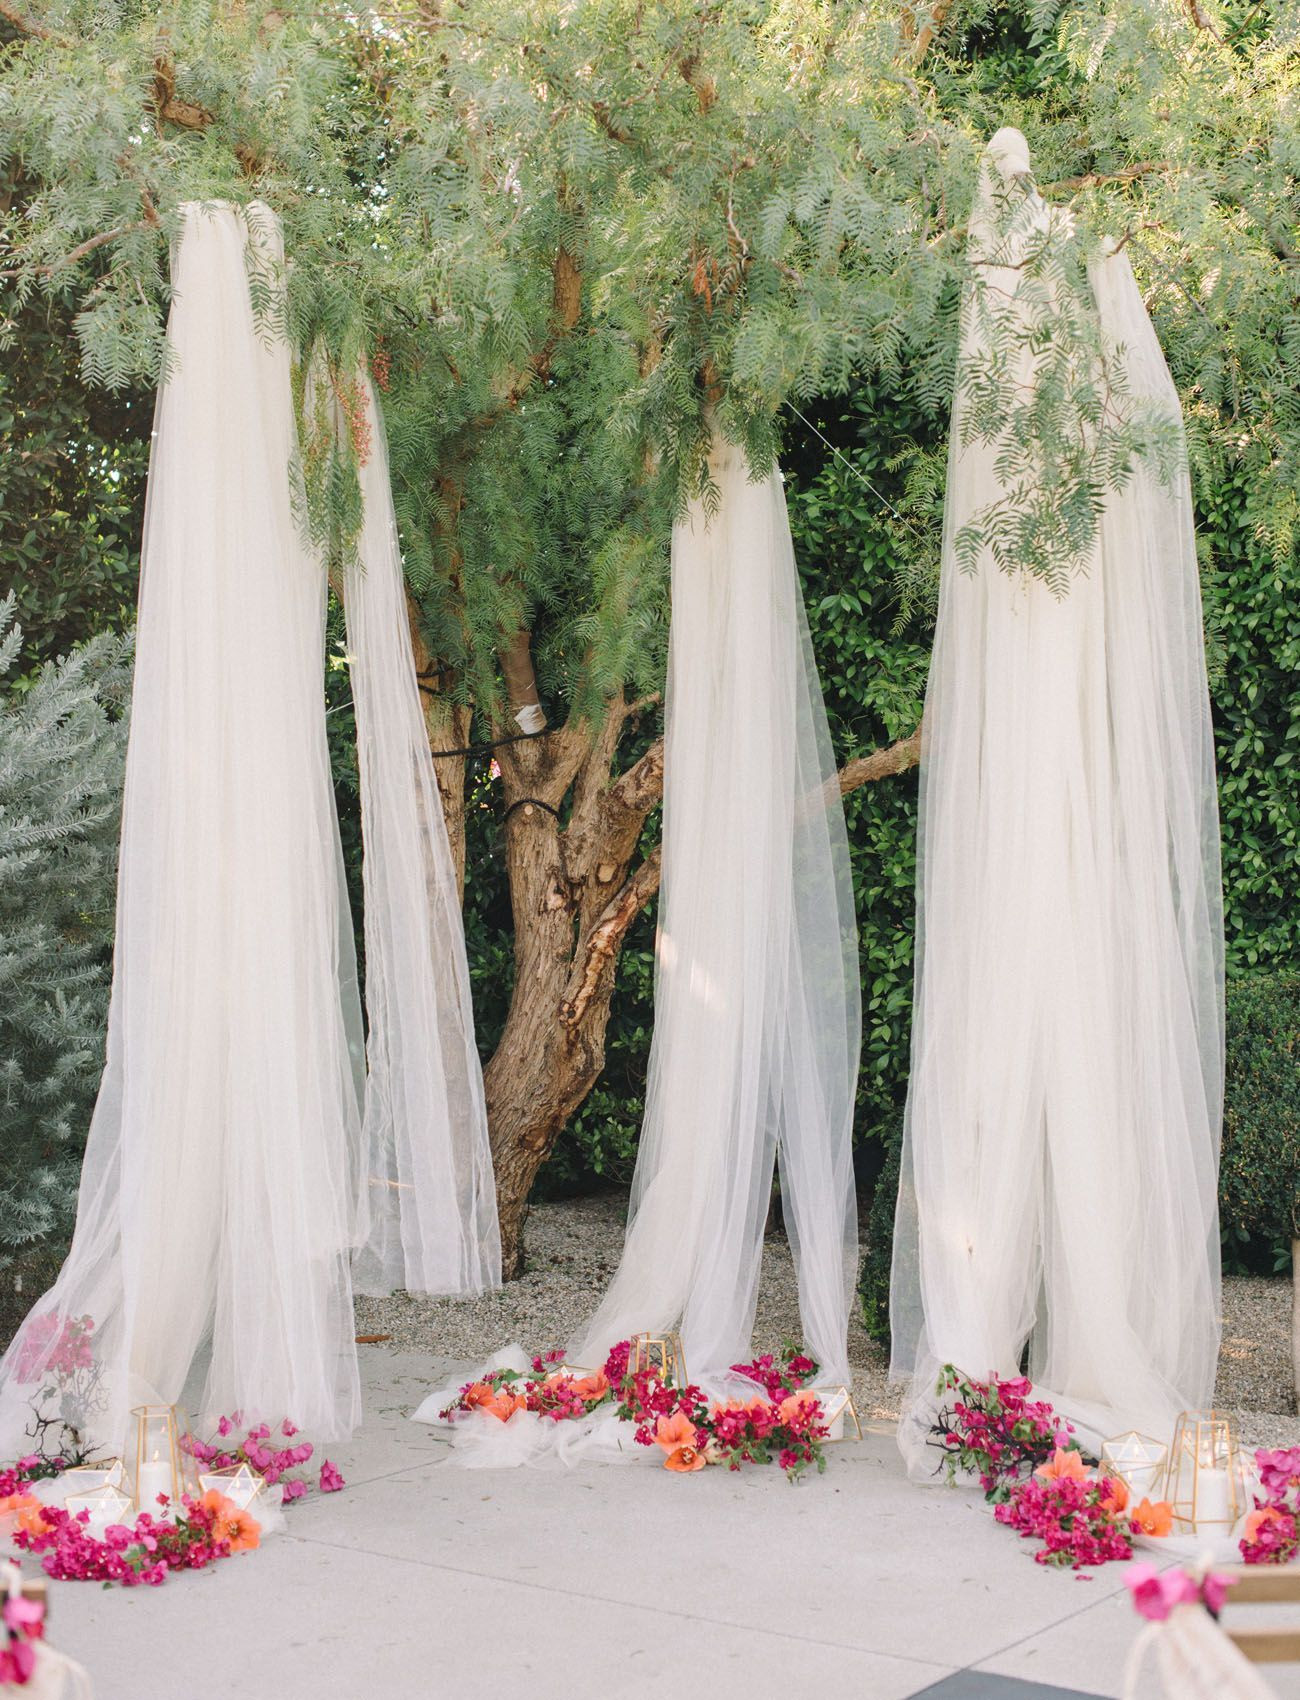 DIY Wedding Backdrop Fabric
 10 Creative Ways to Use Fabric in Your Wedding